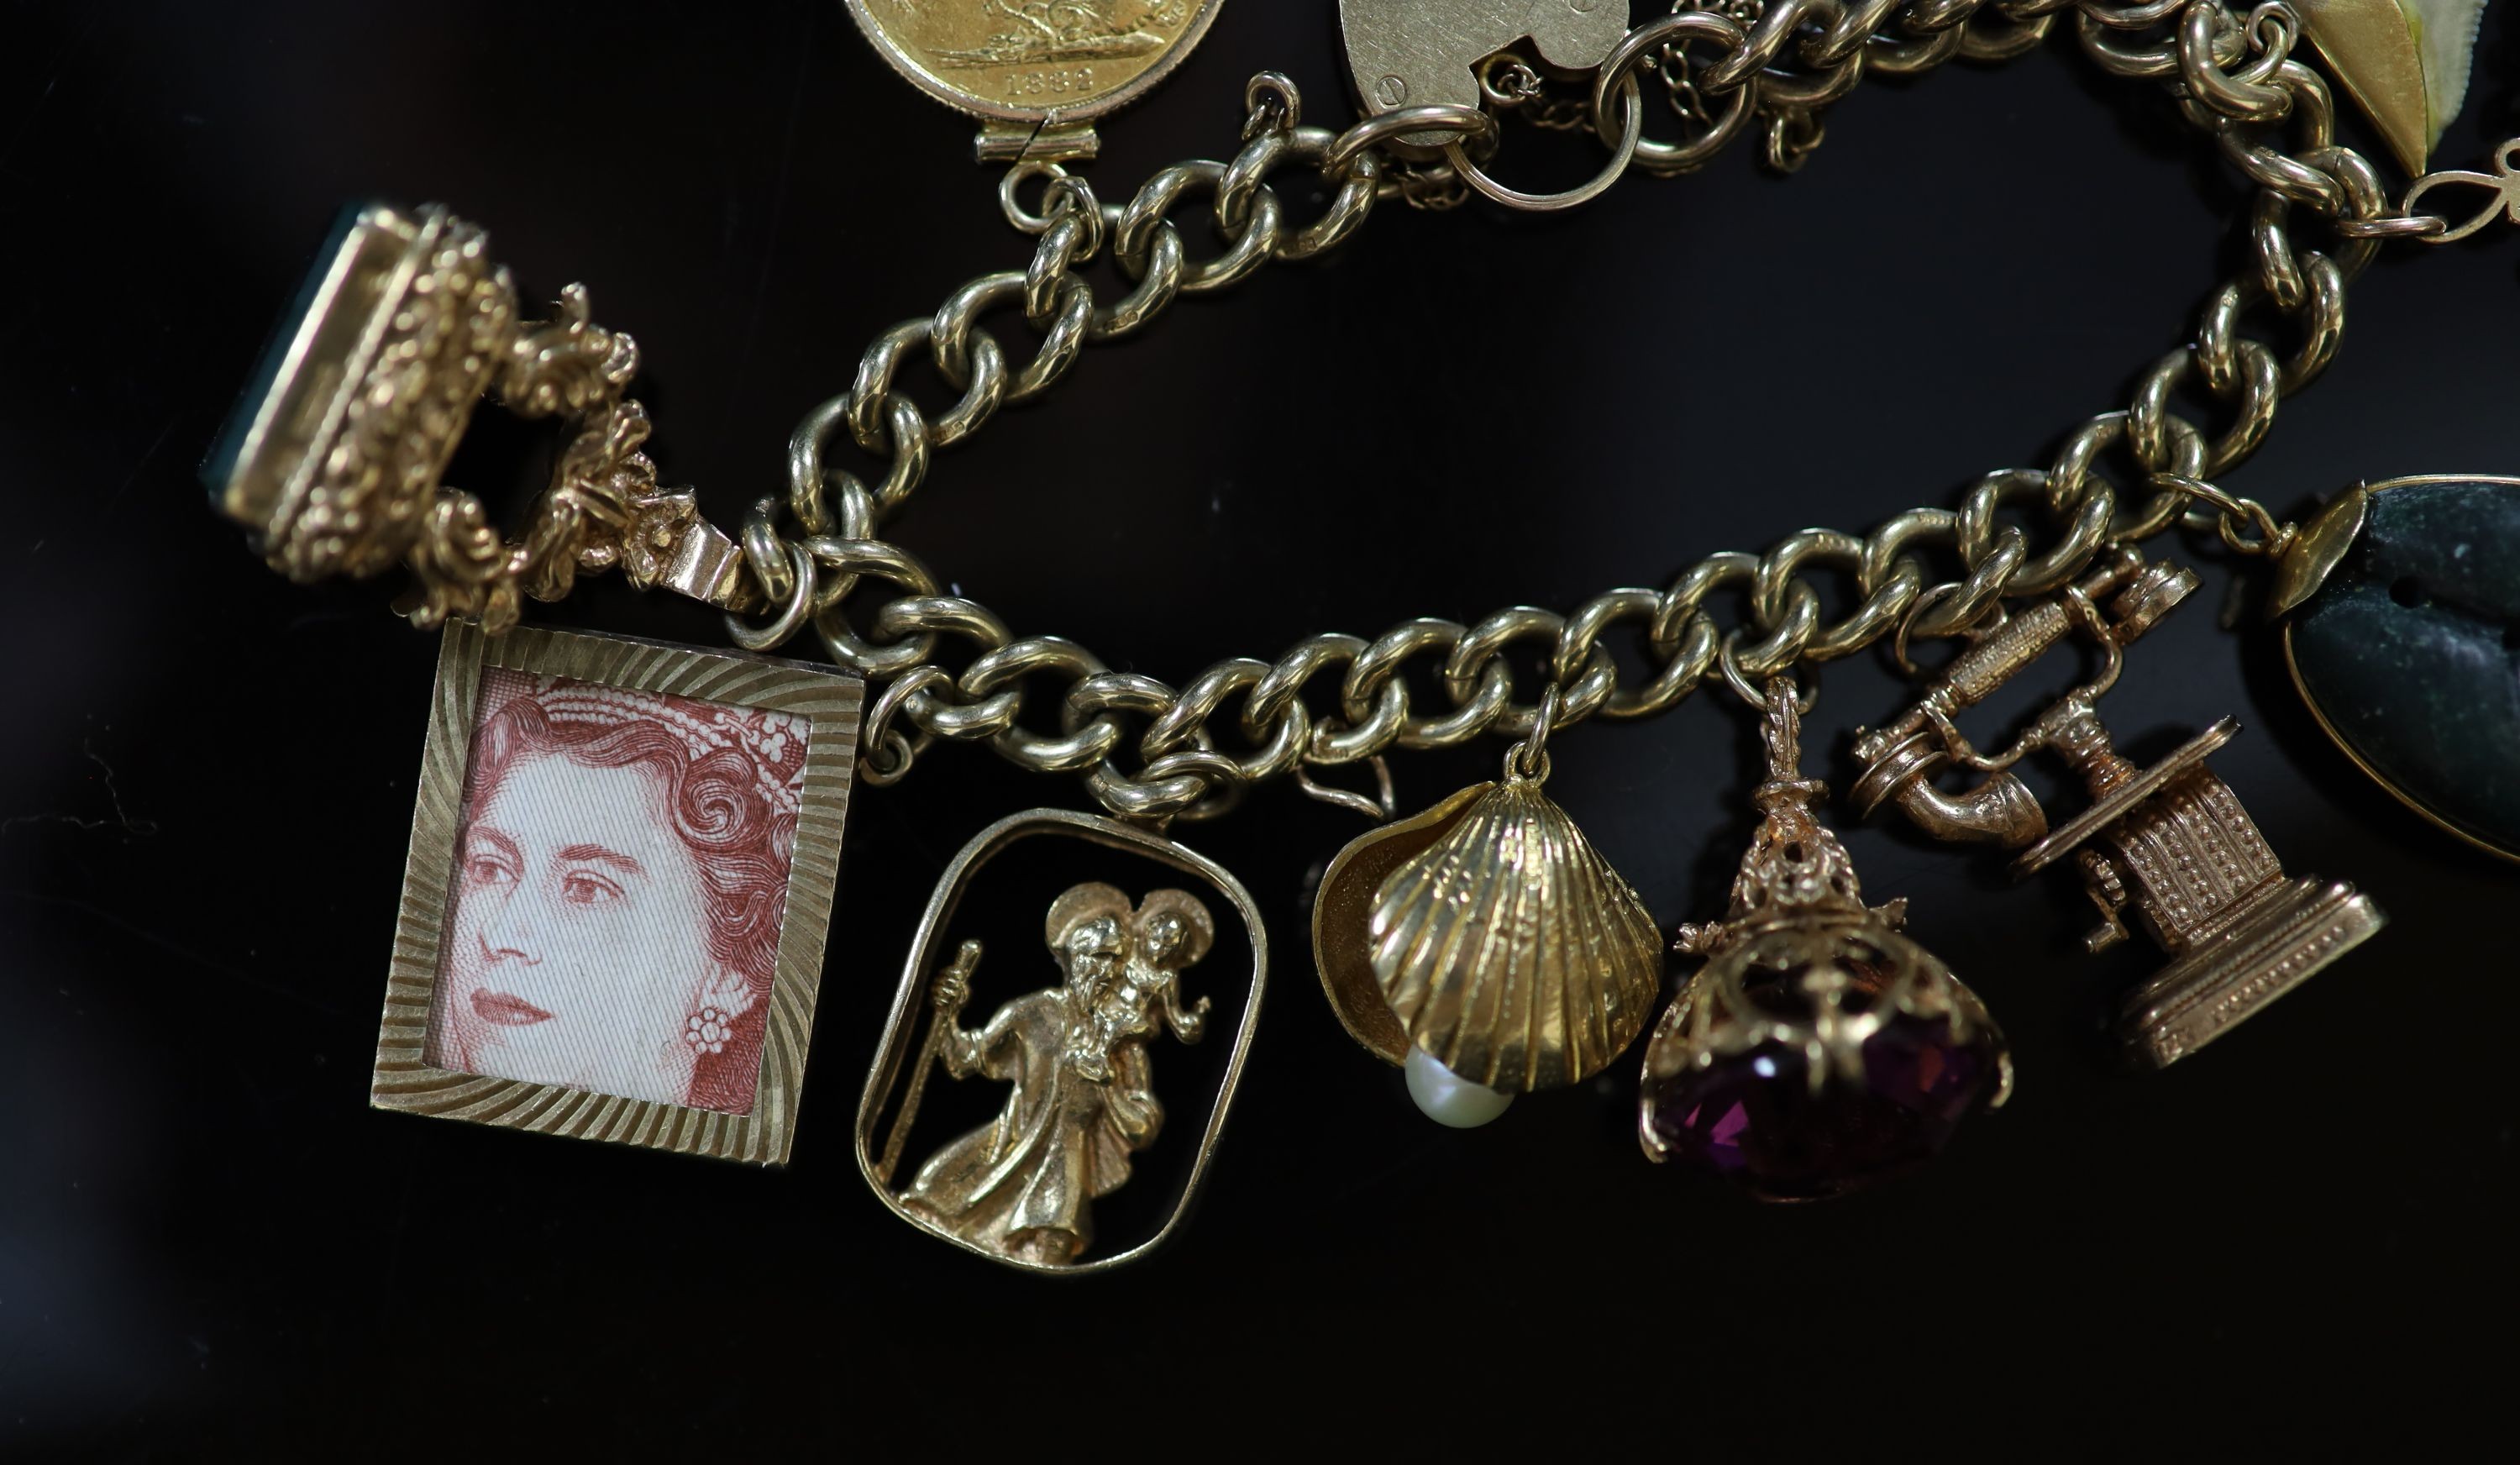 A 1970's 9ct. gold charm bracelet